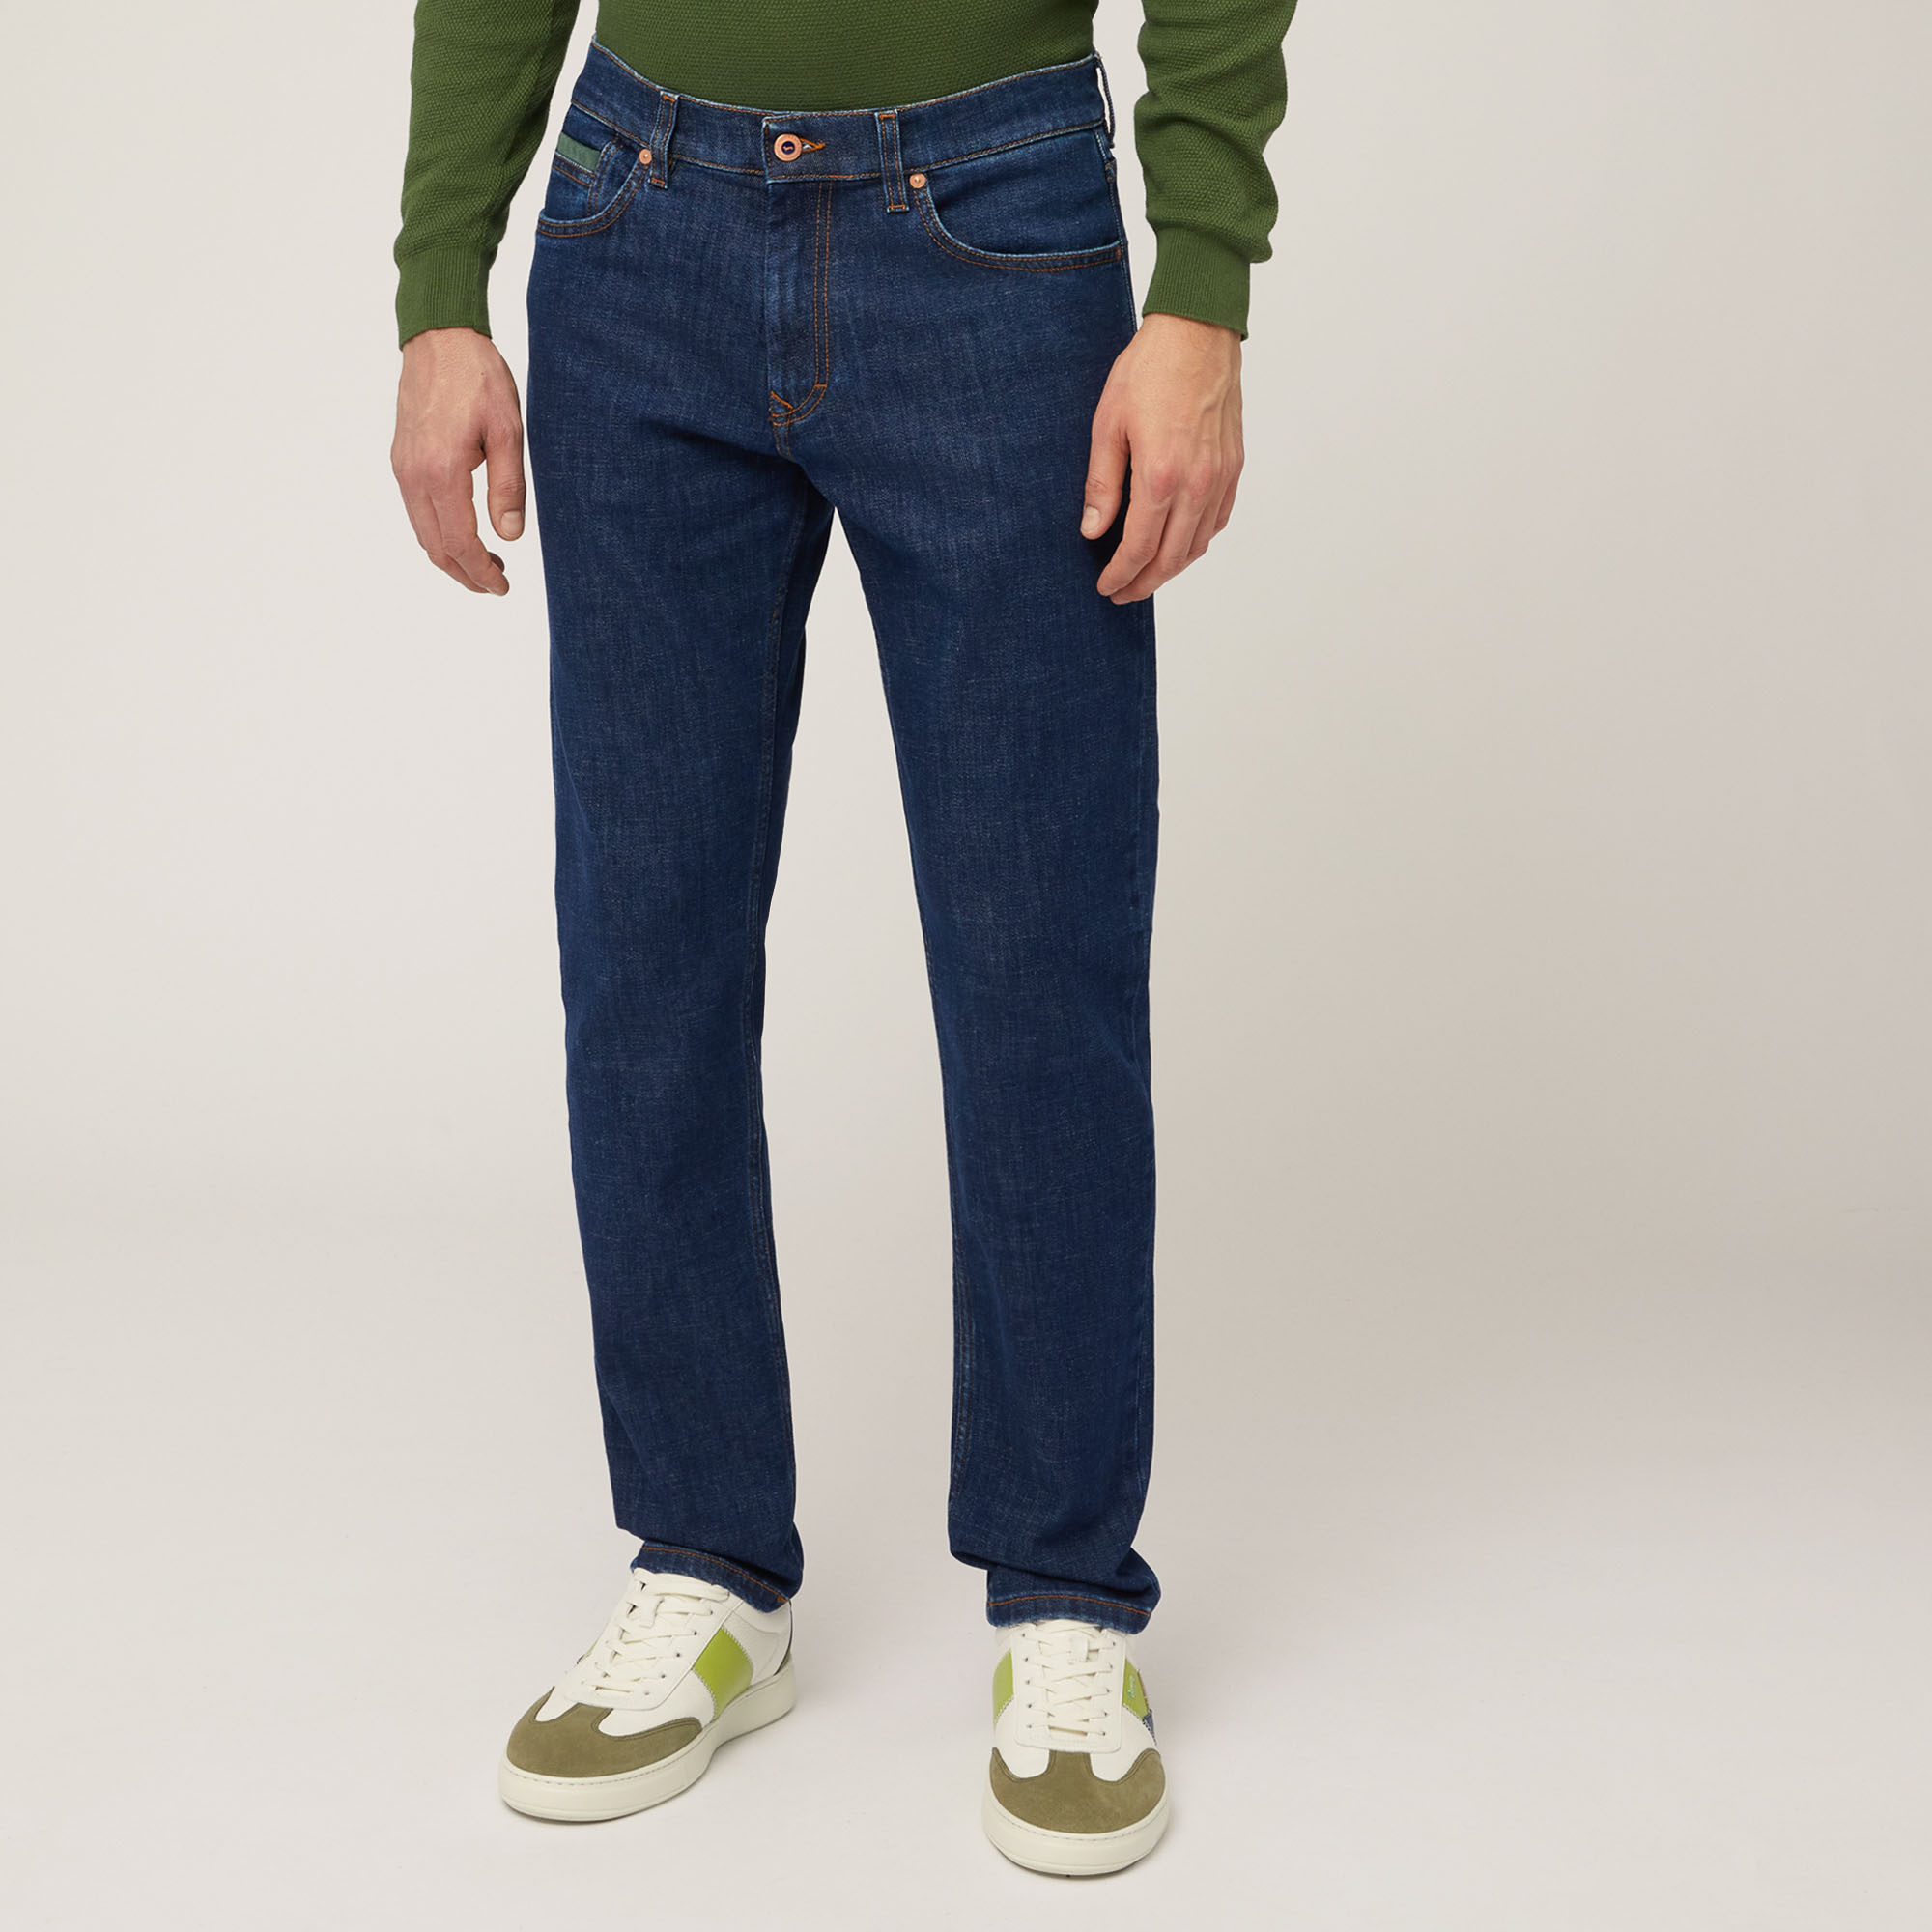 Pantaloni 5 Tasche Con Inserti, Verde Scuro, large image number 0